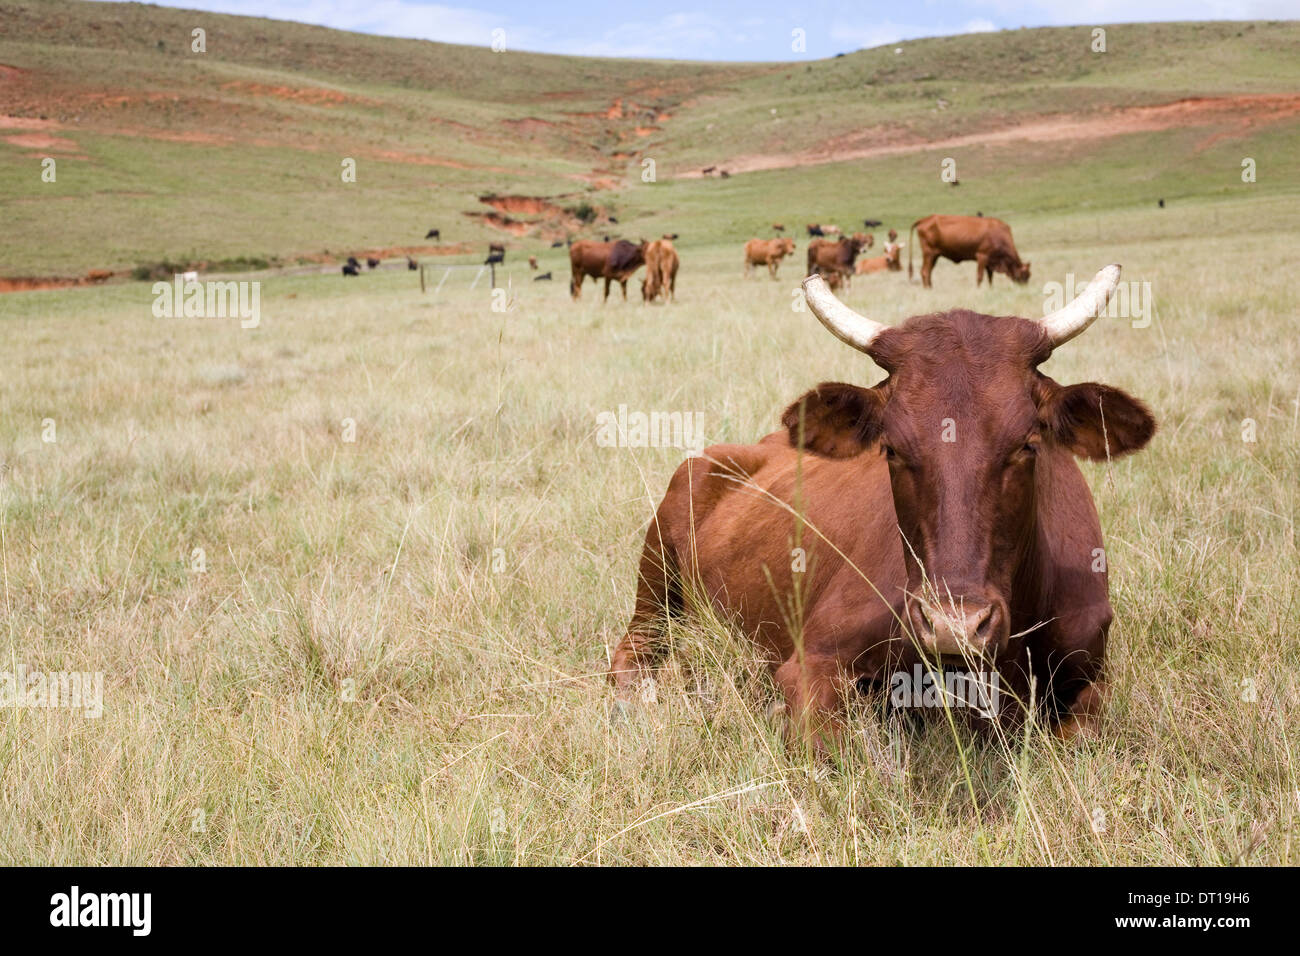 cattle, grassland and soil erosion. 24 FEBRUARY 2010 POTSHINI SOUTH AFRICA PHOTO/JOHN ROBINSON Stock Photo